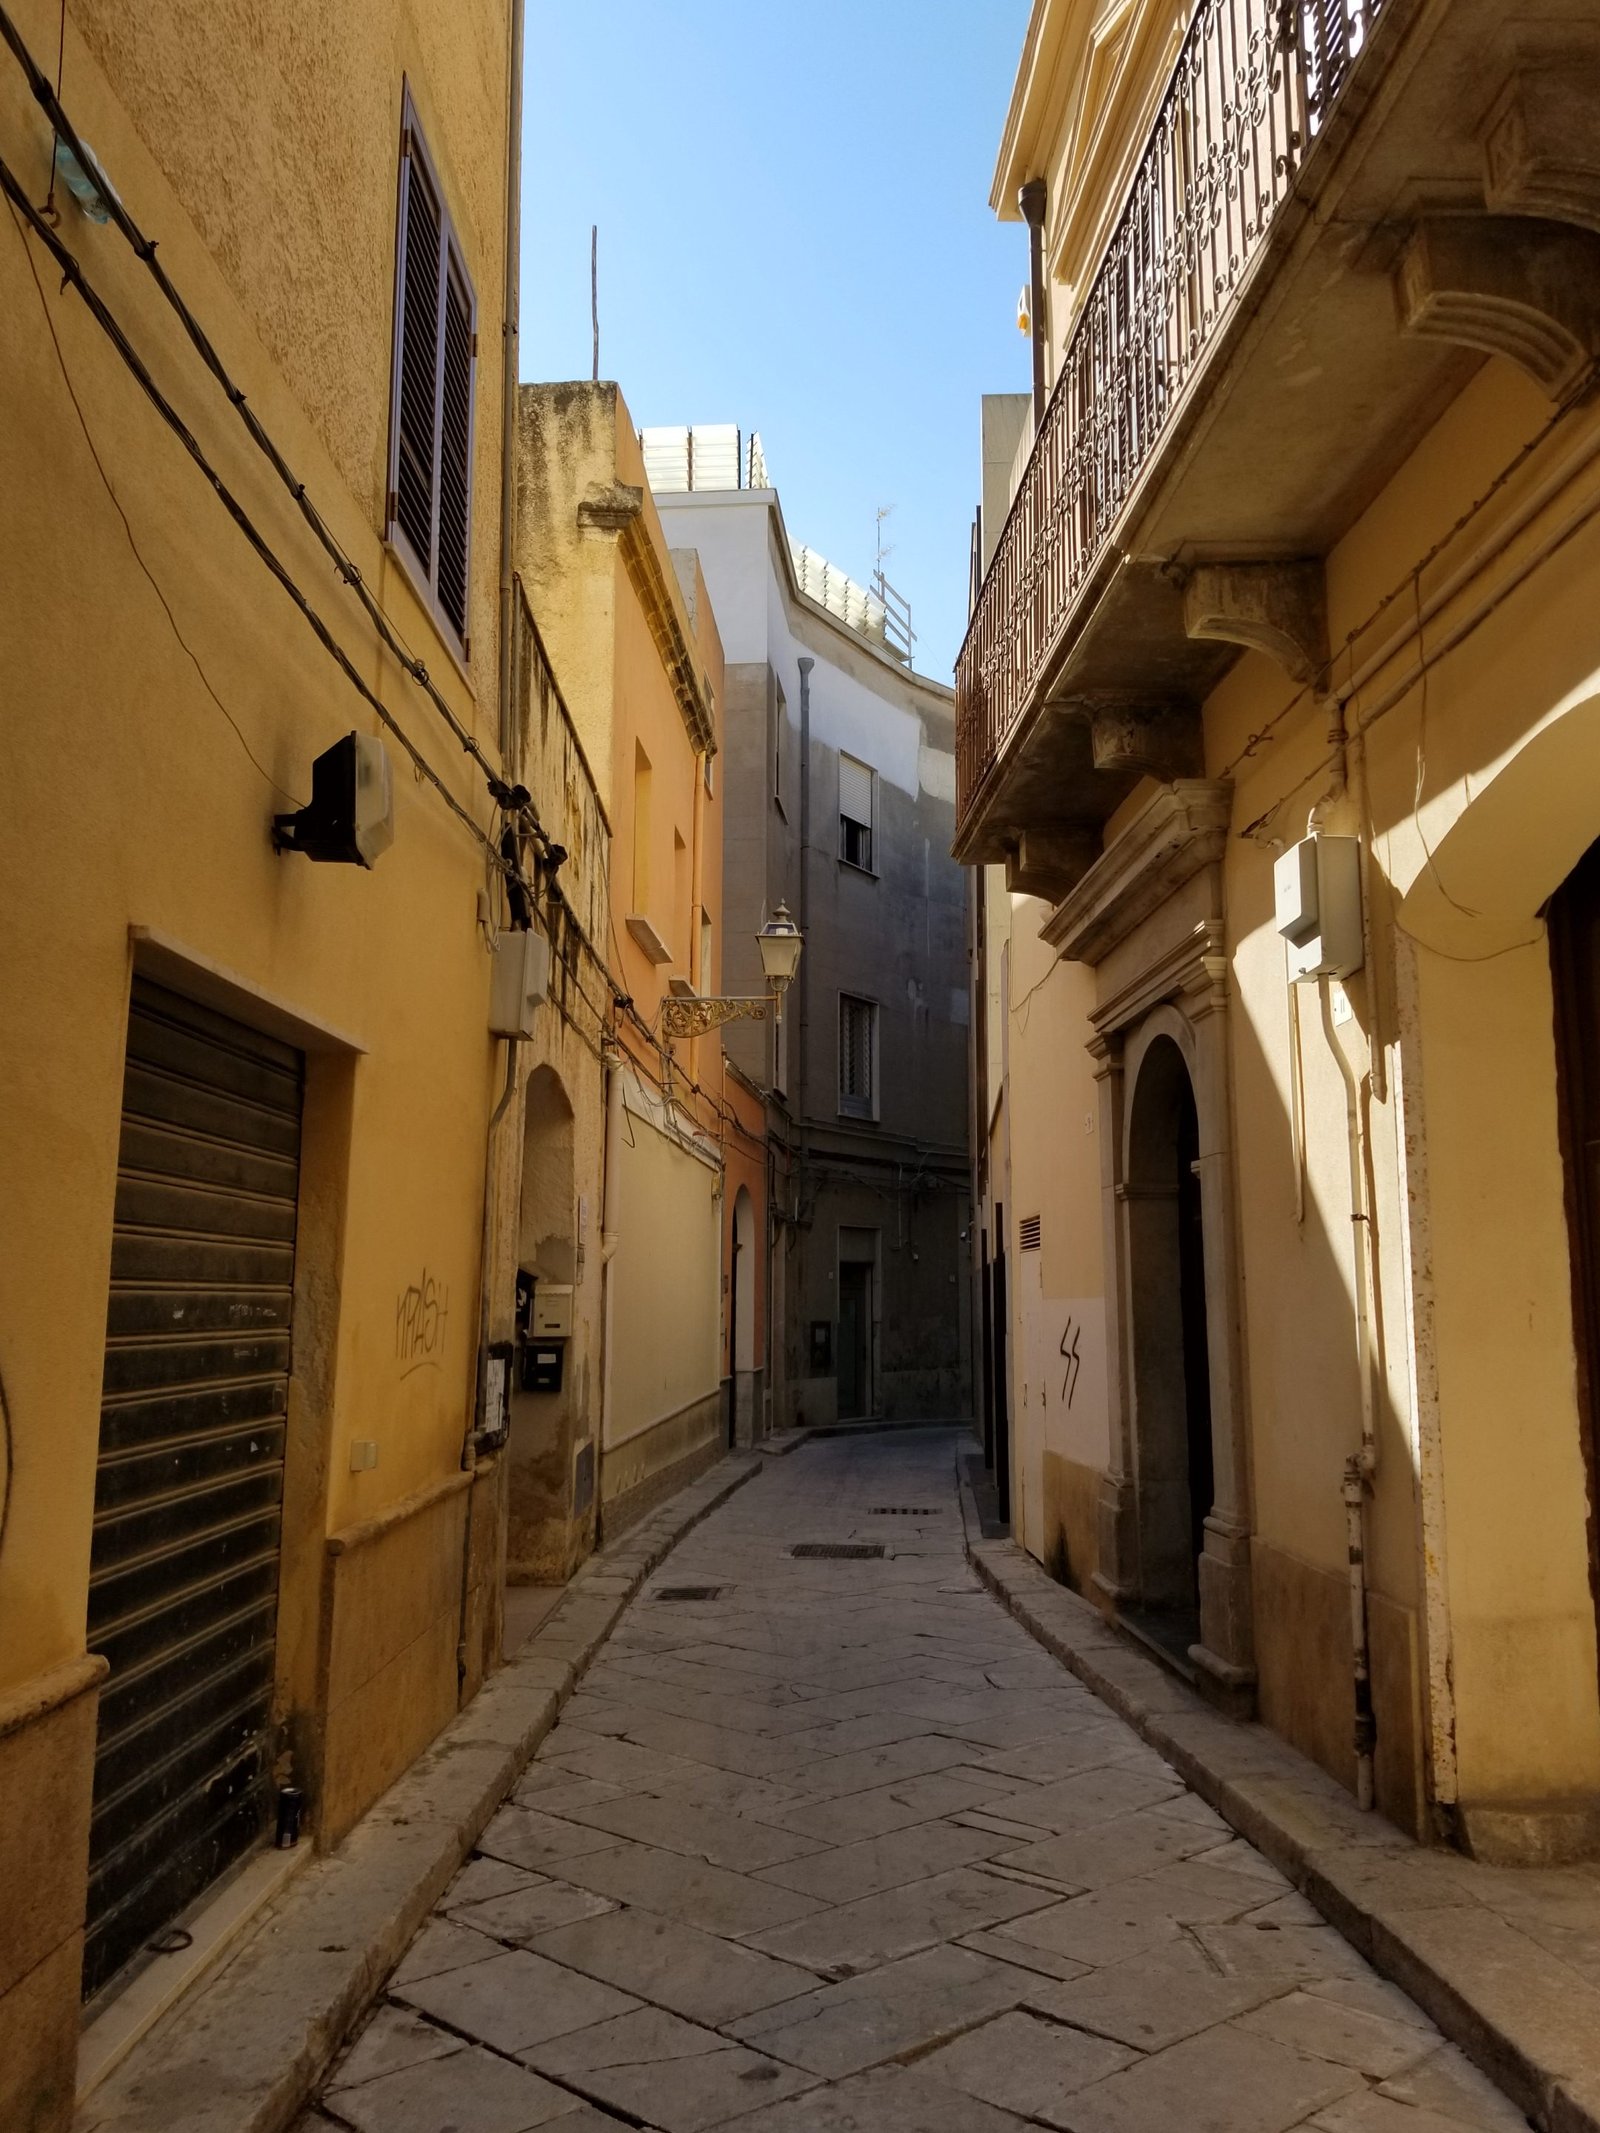 Marsala, Sicily, 4.25 towns, historic city center street photo, ouritalianjourney.com